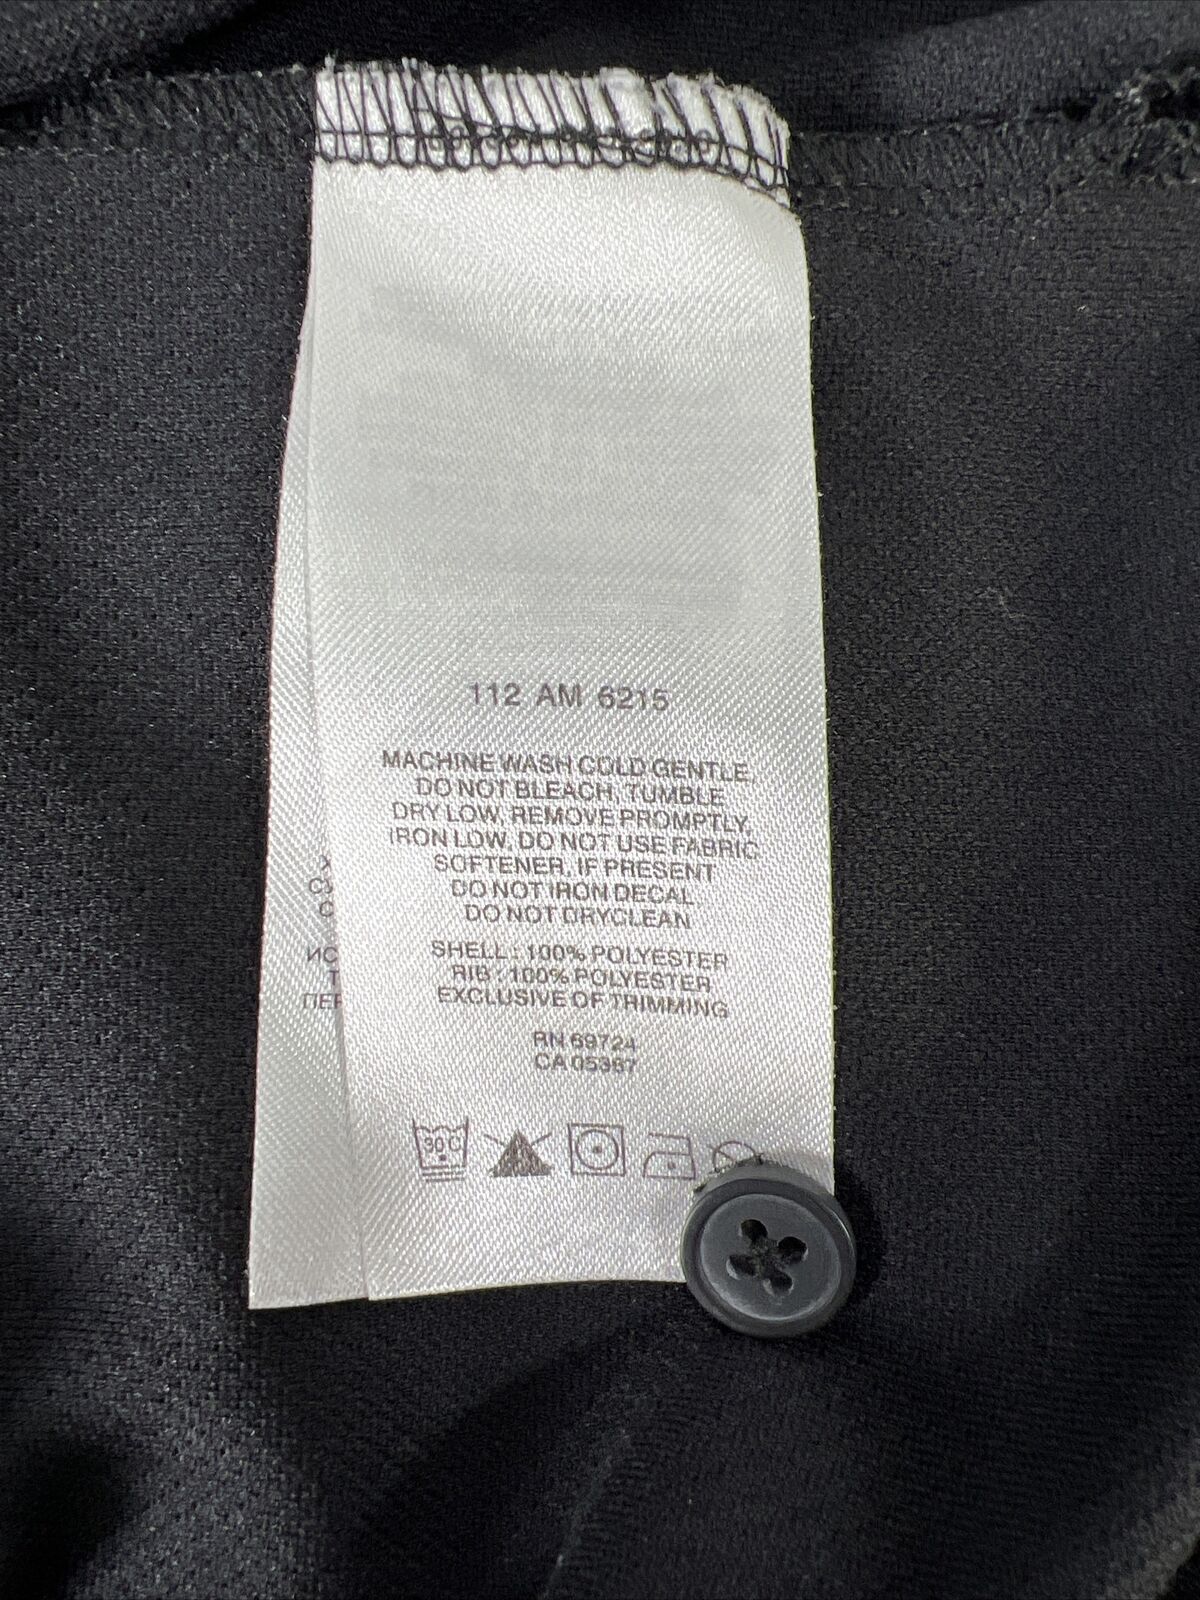 Columbia Men's Black Omni Shade Short Sleeve Polo Shirt - XL